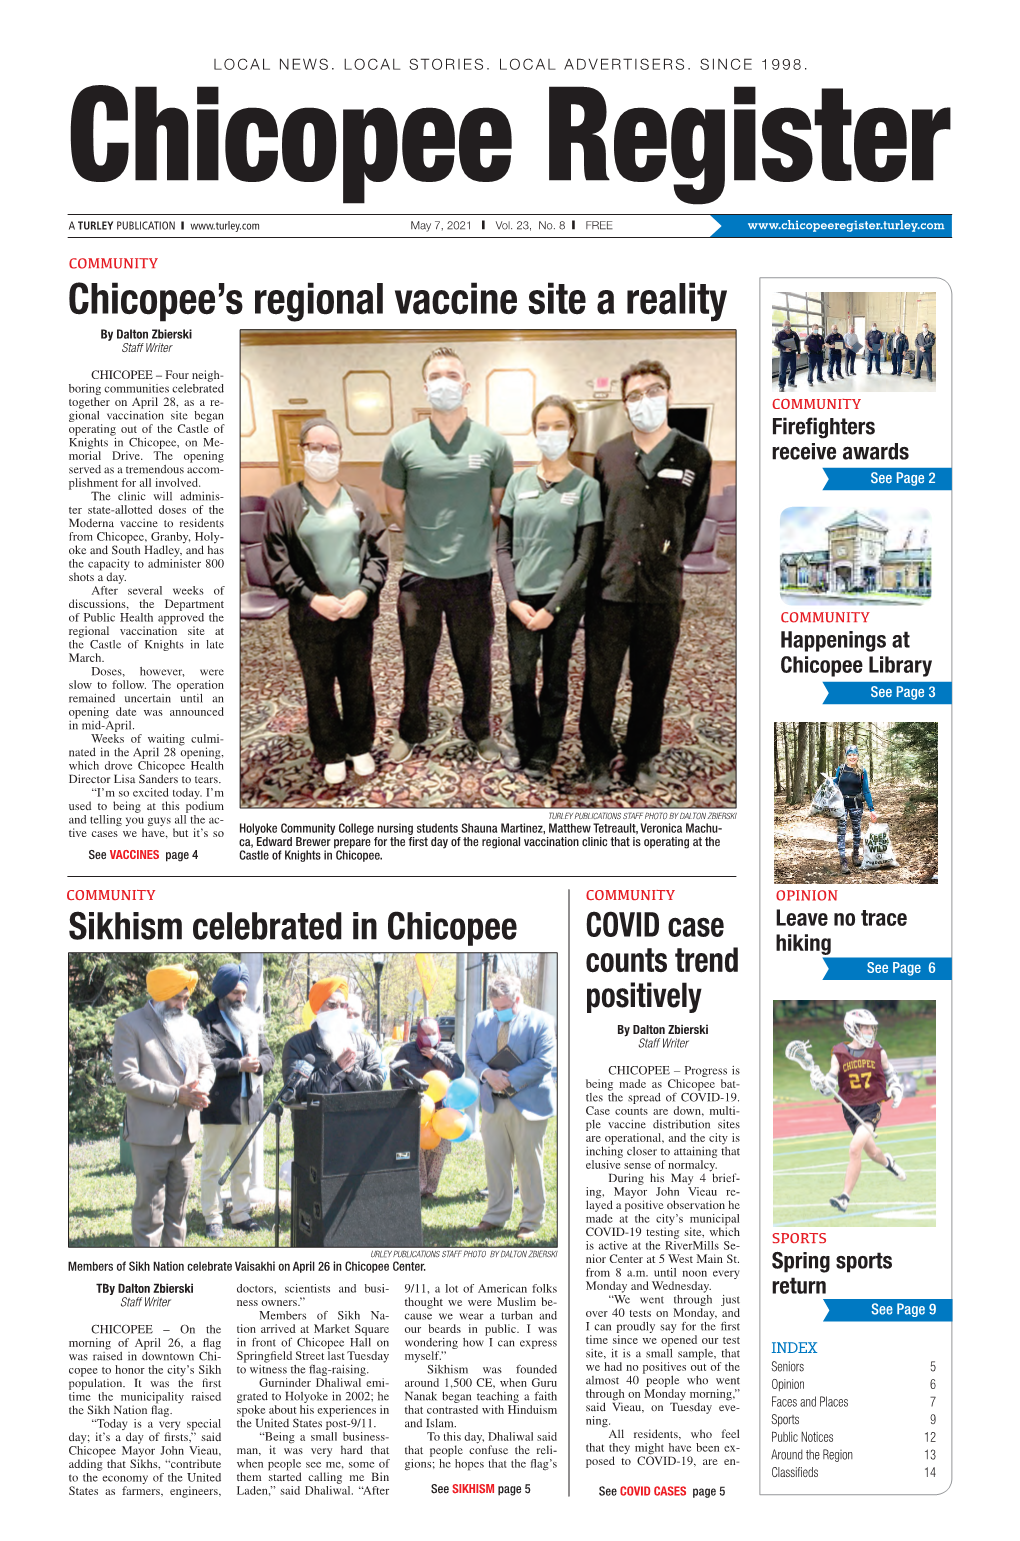 Chicopee's Regional Vaccine Site a Reality